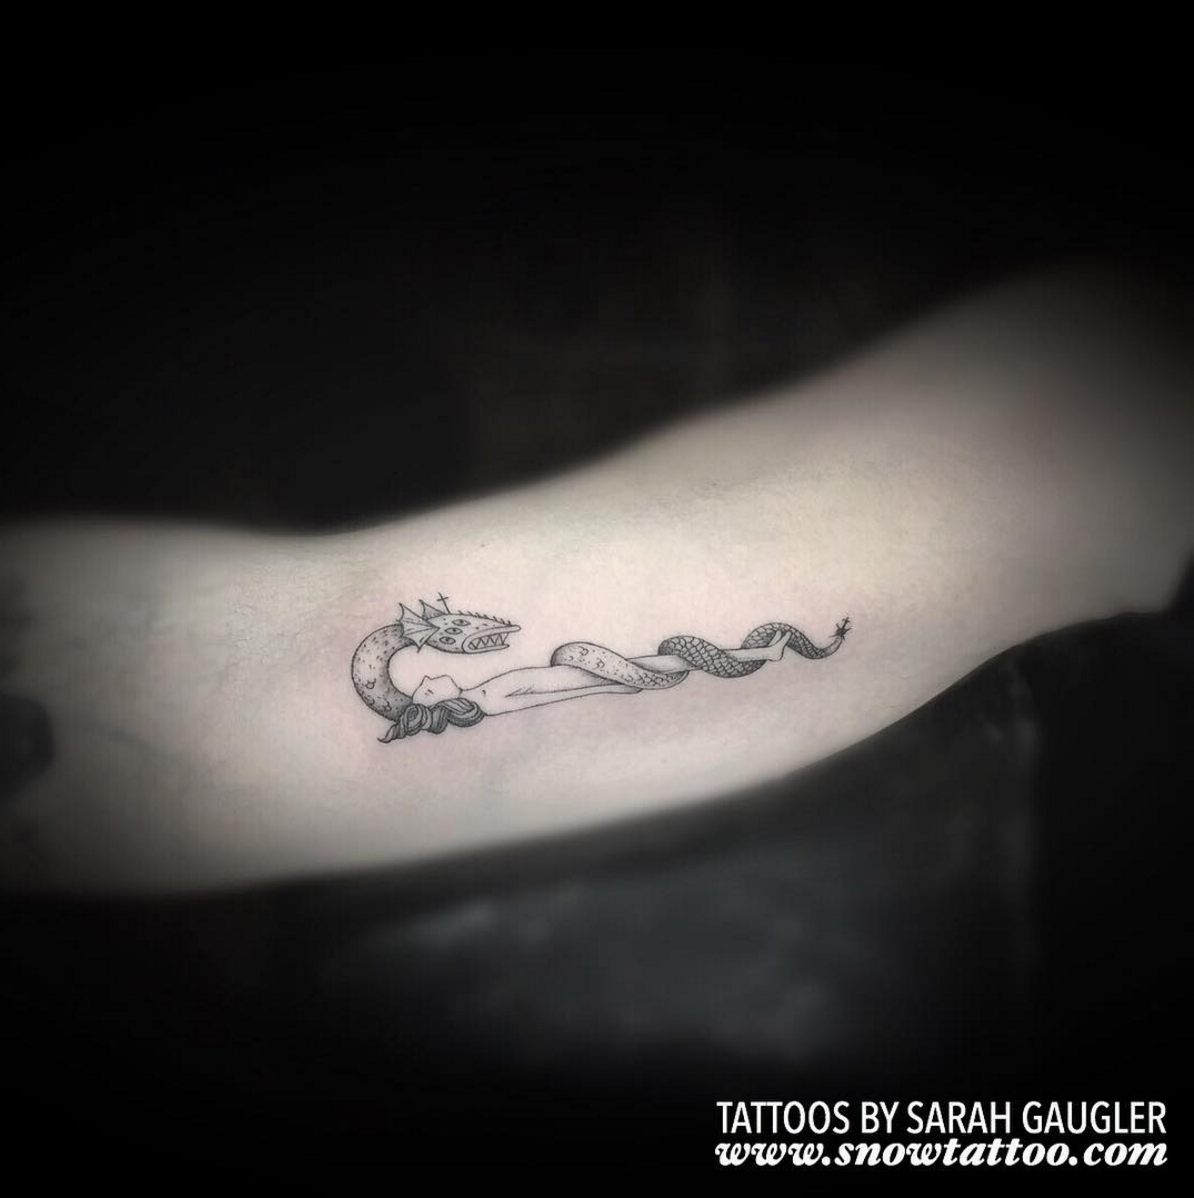 Sarah Gaugler Snow Tattoo Custom Serpent New York Best Tattoos Best Tattoo Artist NYC.png